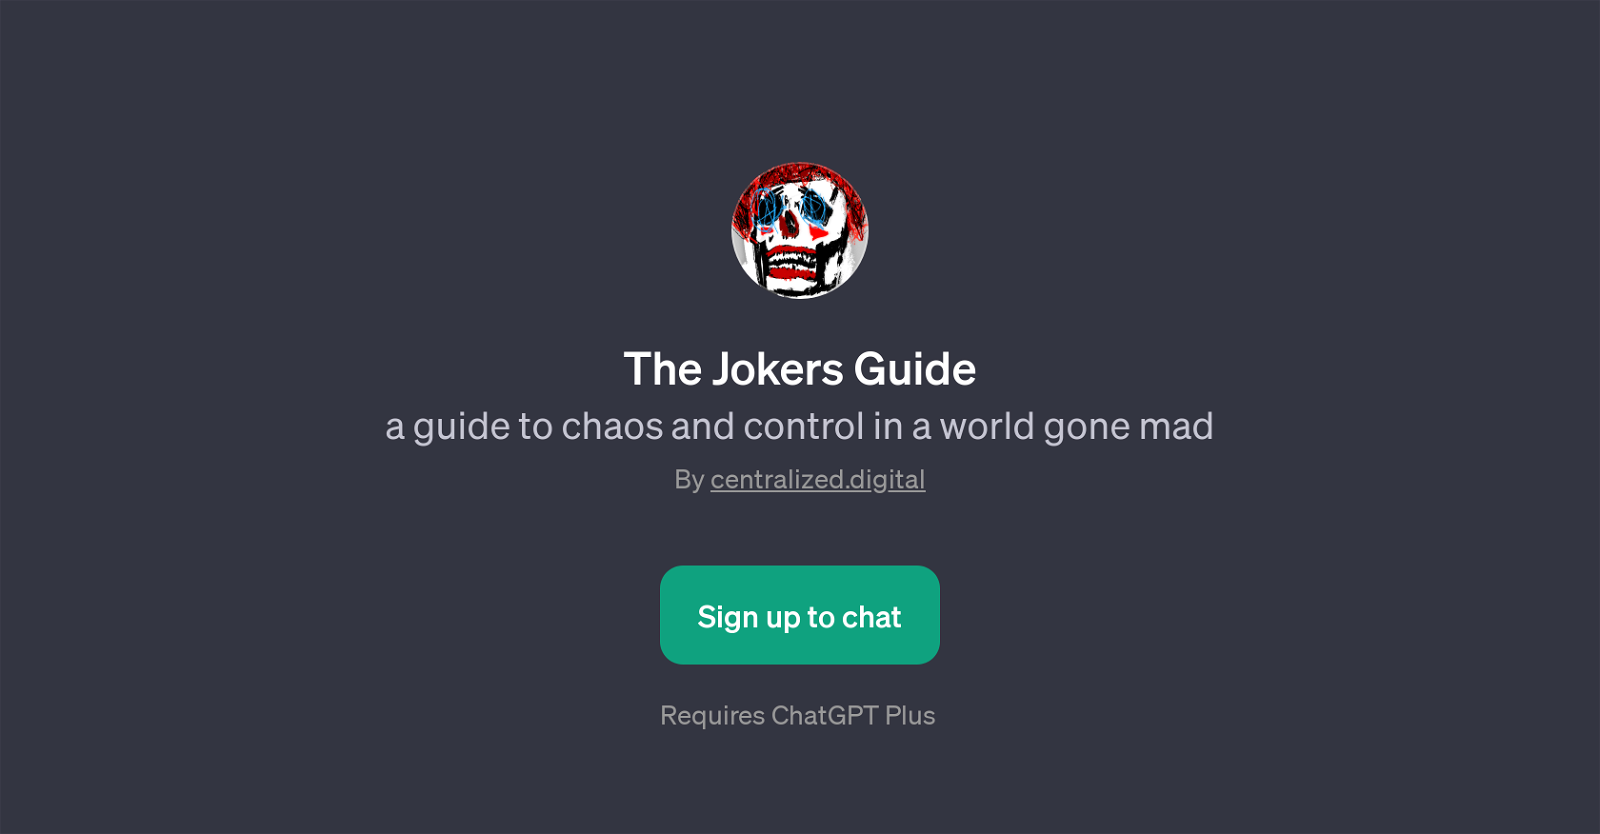 The Jokers Guide website